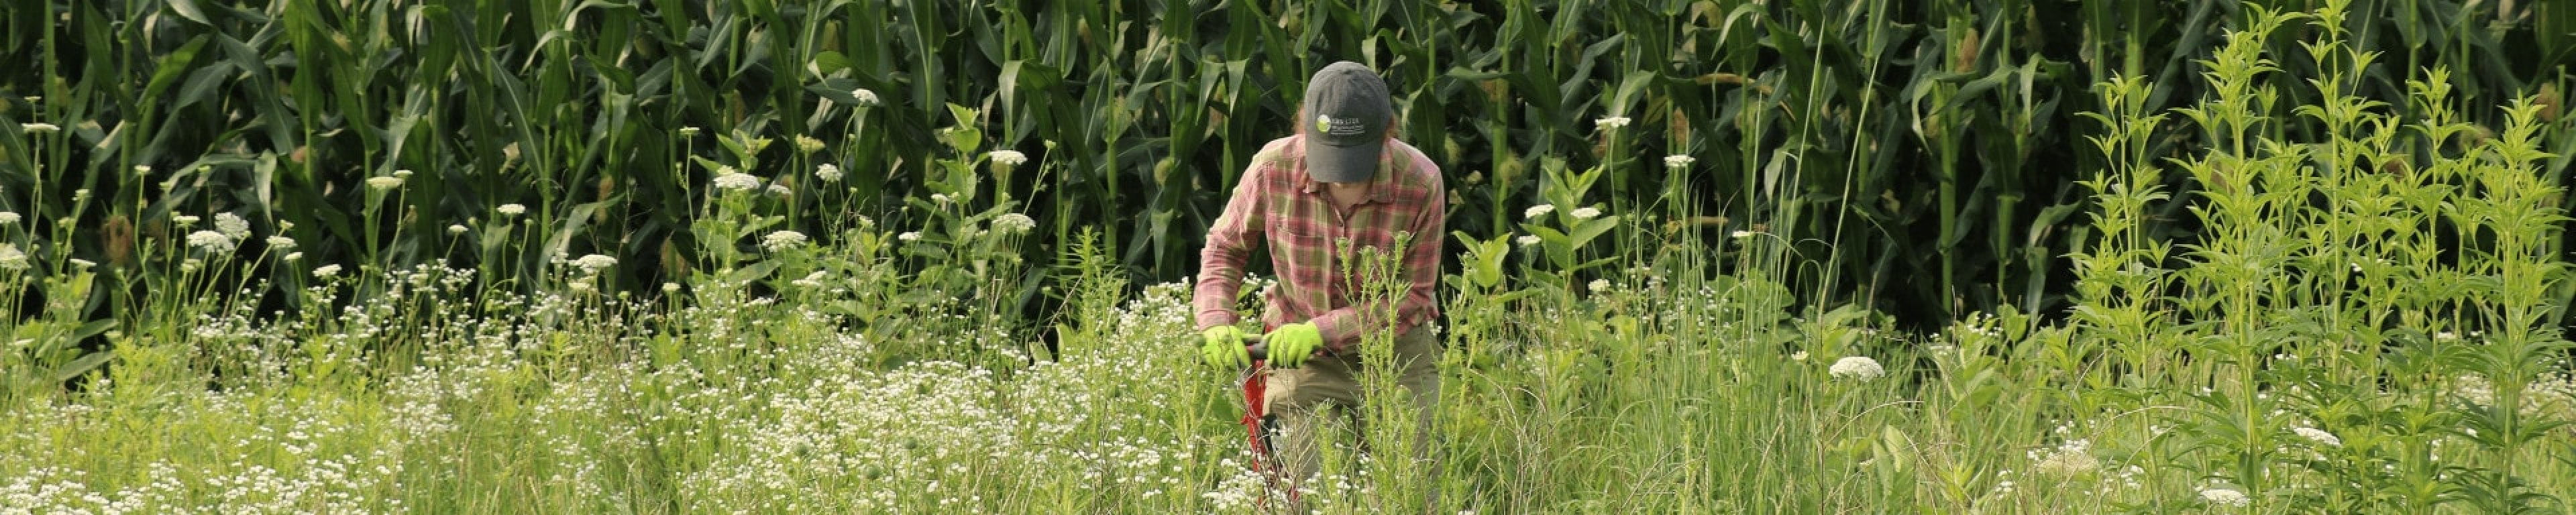 A graduate instructor kneels near a corn field